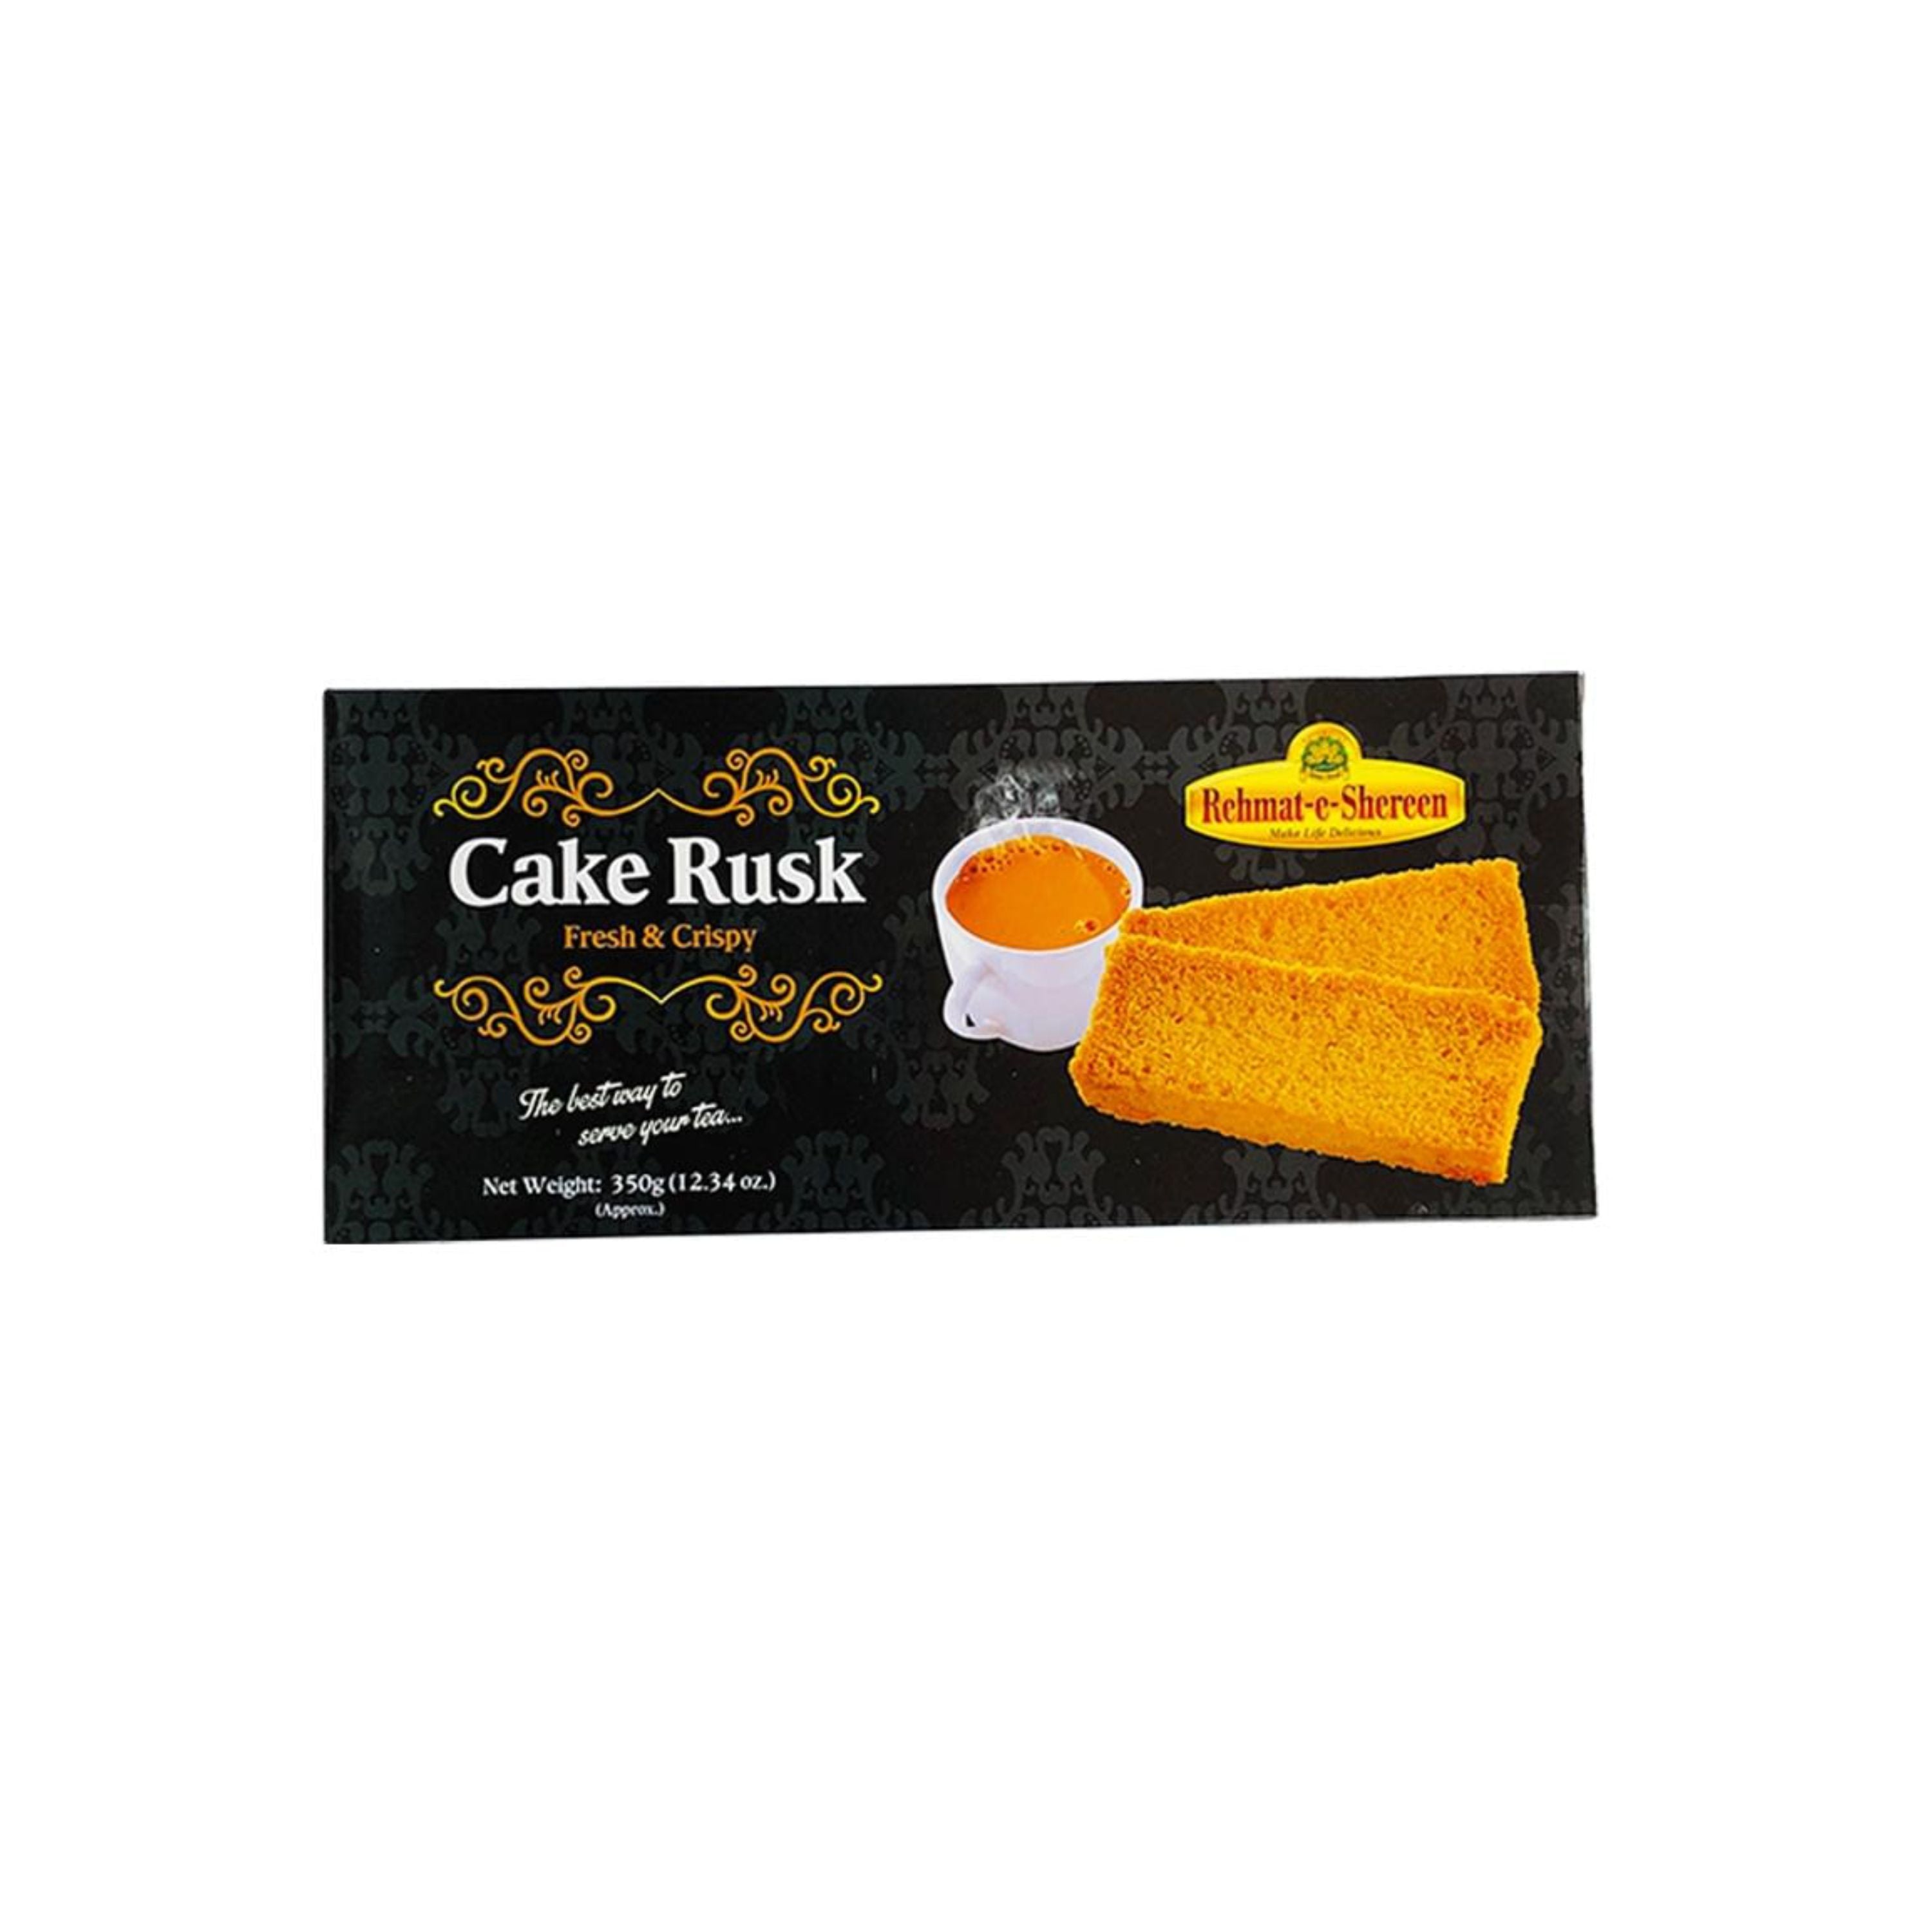 CAKE RUSK PLAIN – SahniBakery